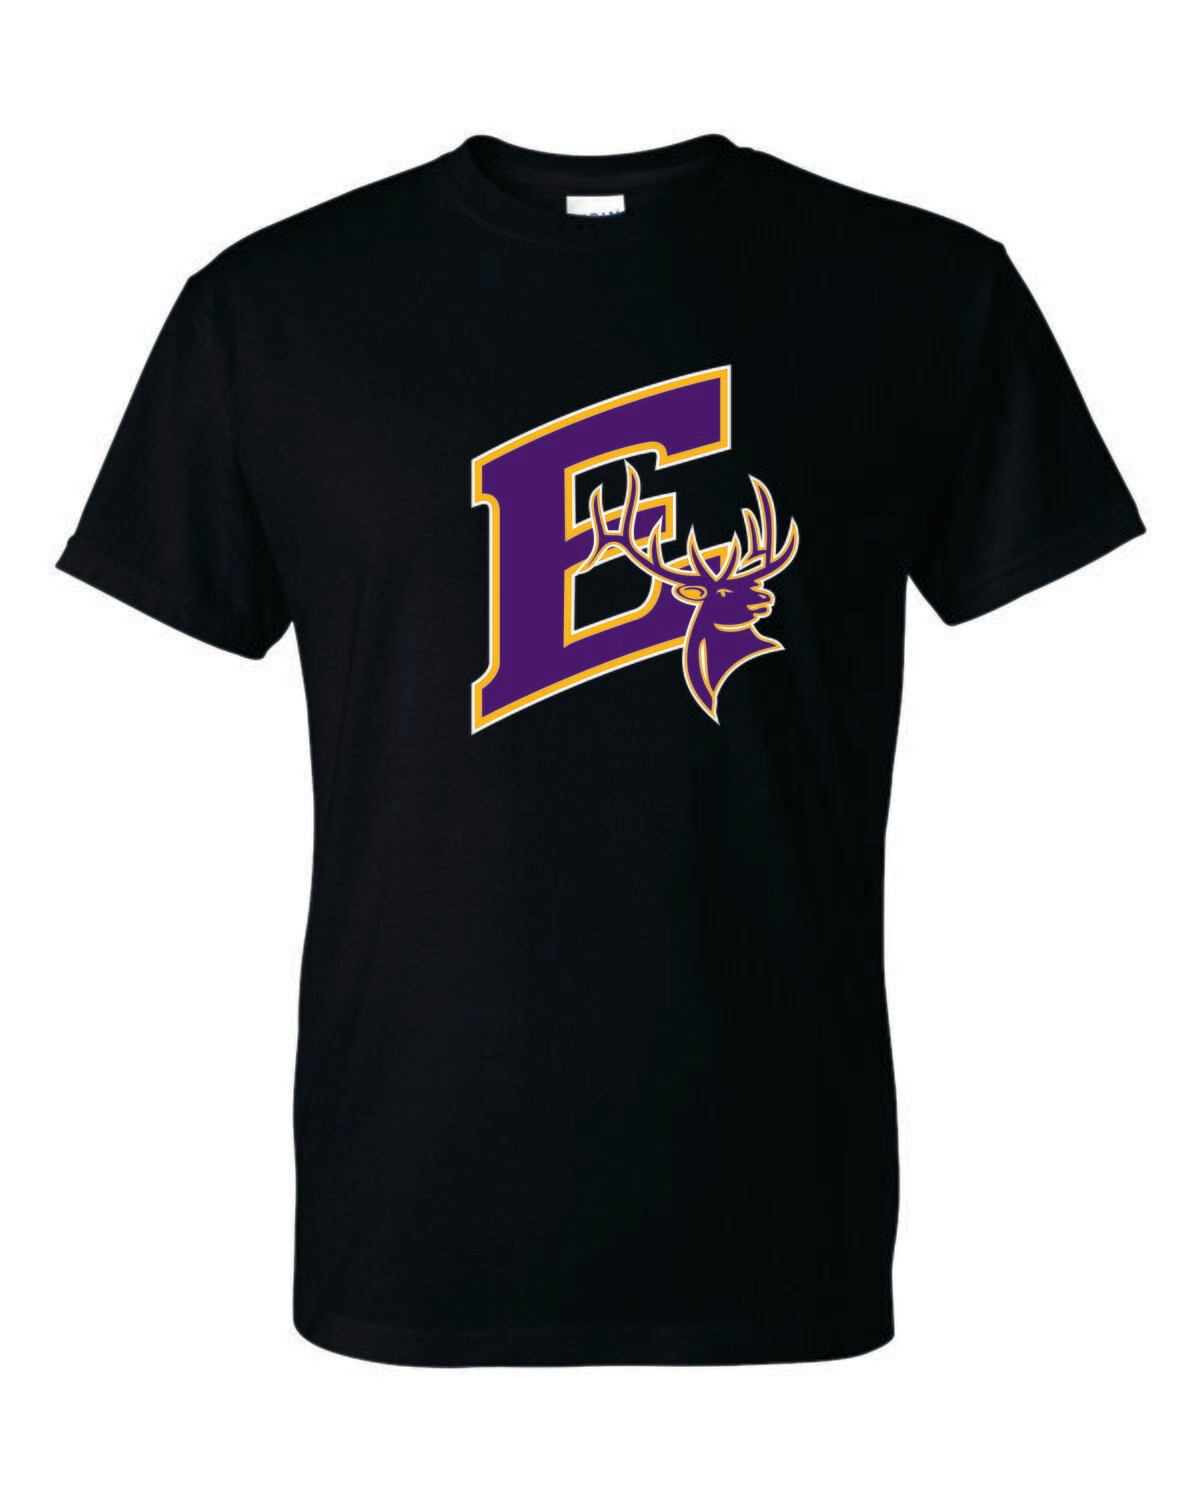 Elkhorn Elks T-Shirt